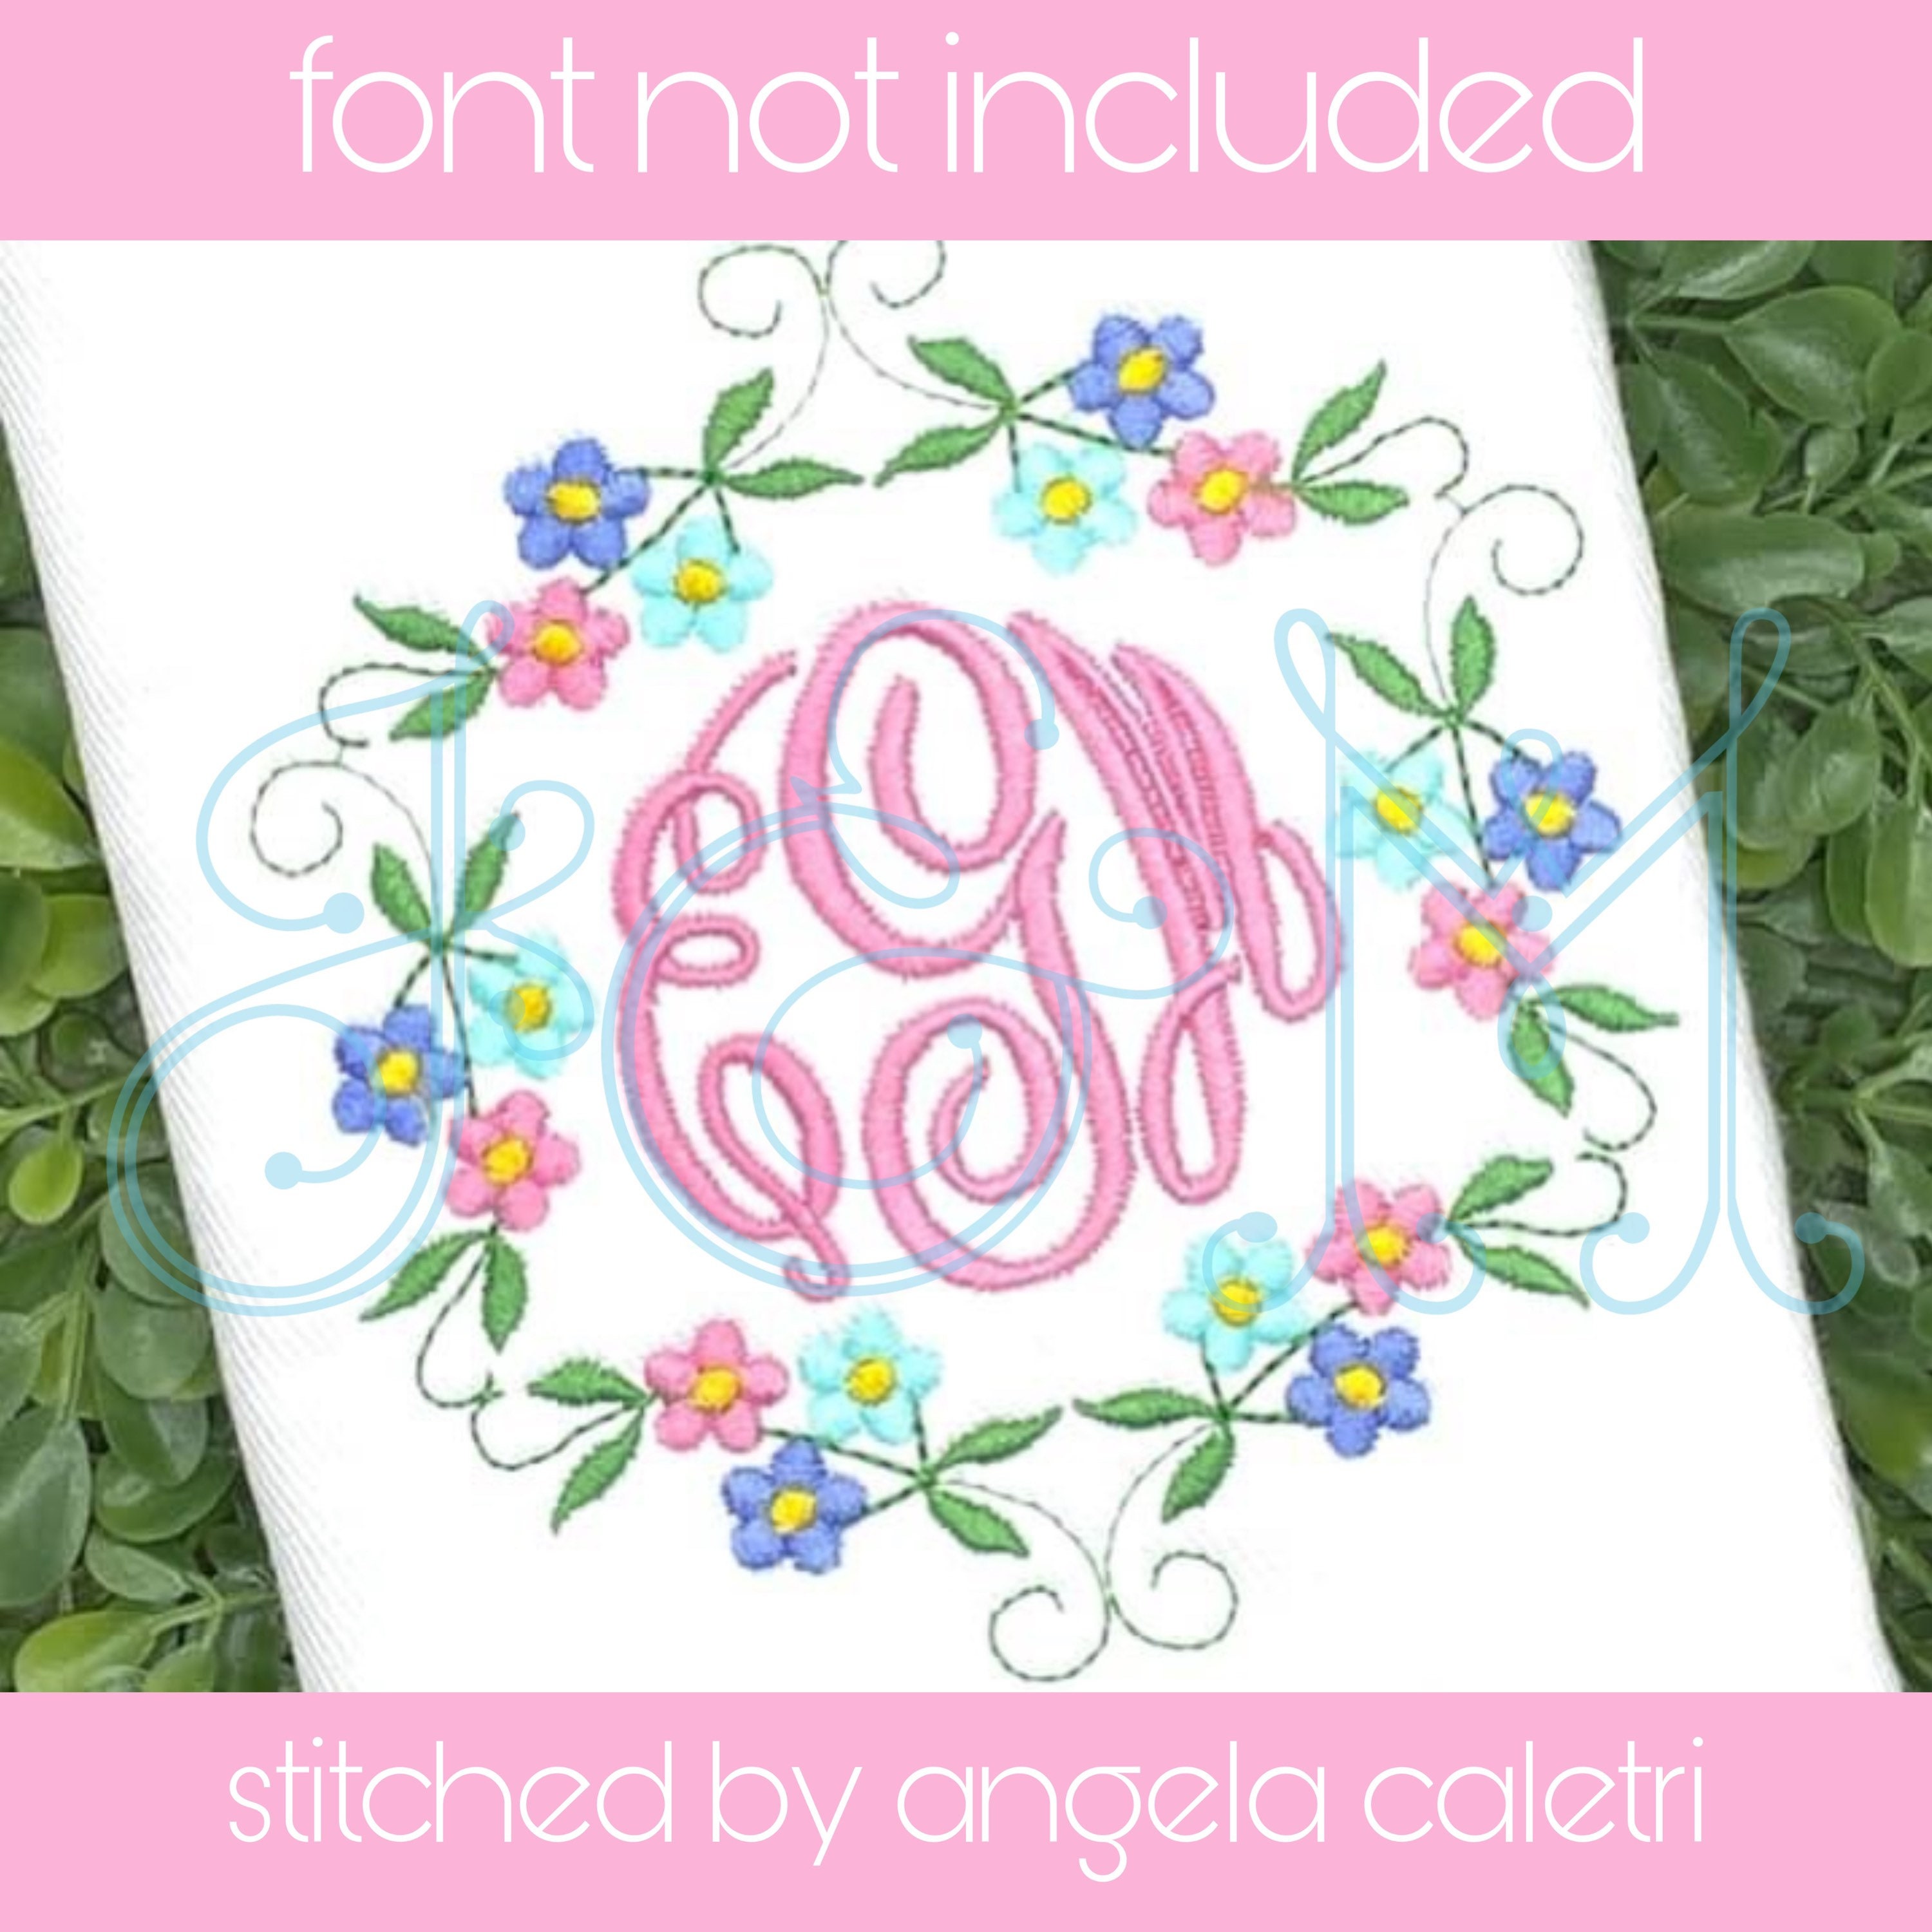 Daisy Flourish Floral Flower Monogram Wreath Frame Vintage Style Machine  Embroidery Design